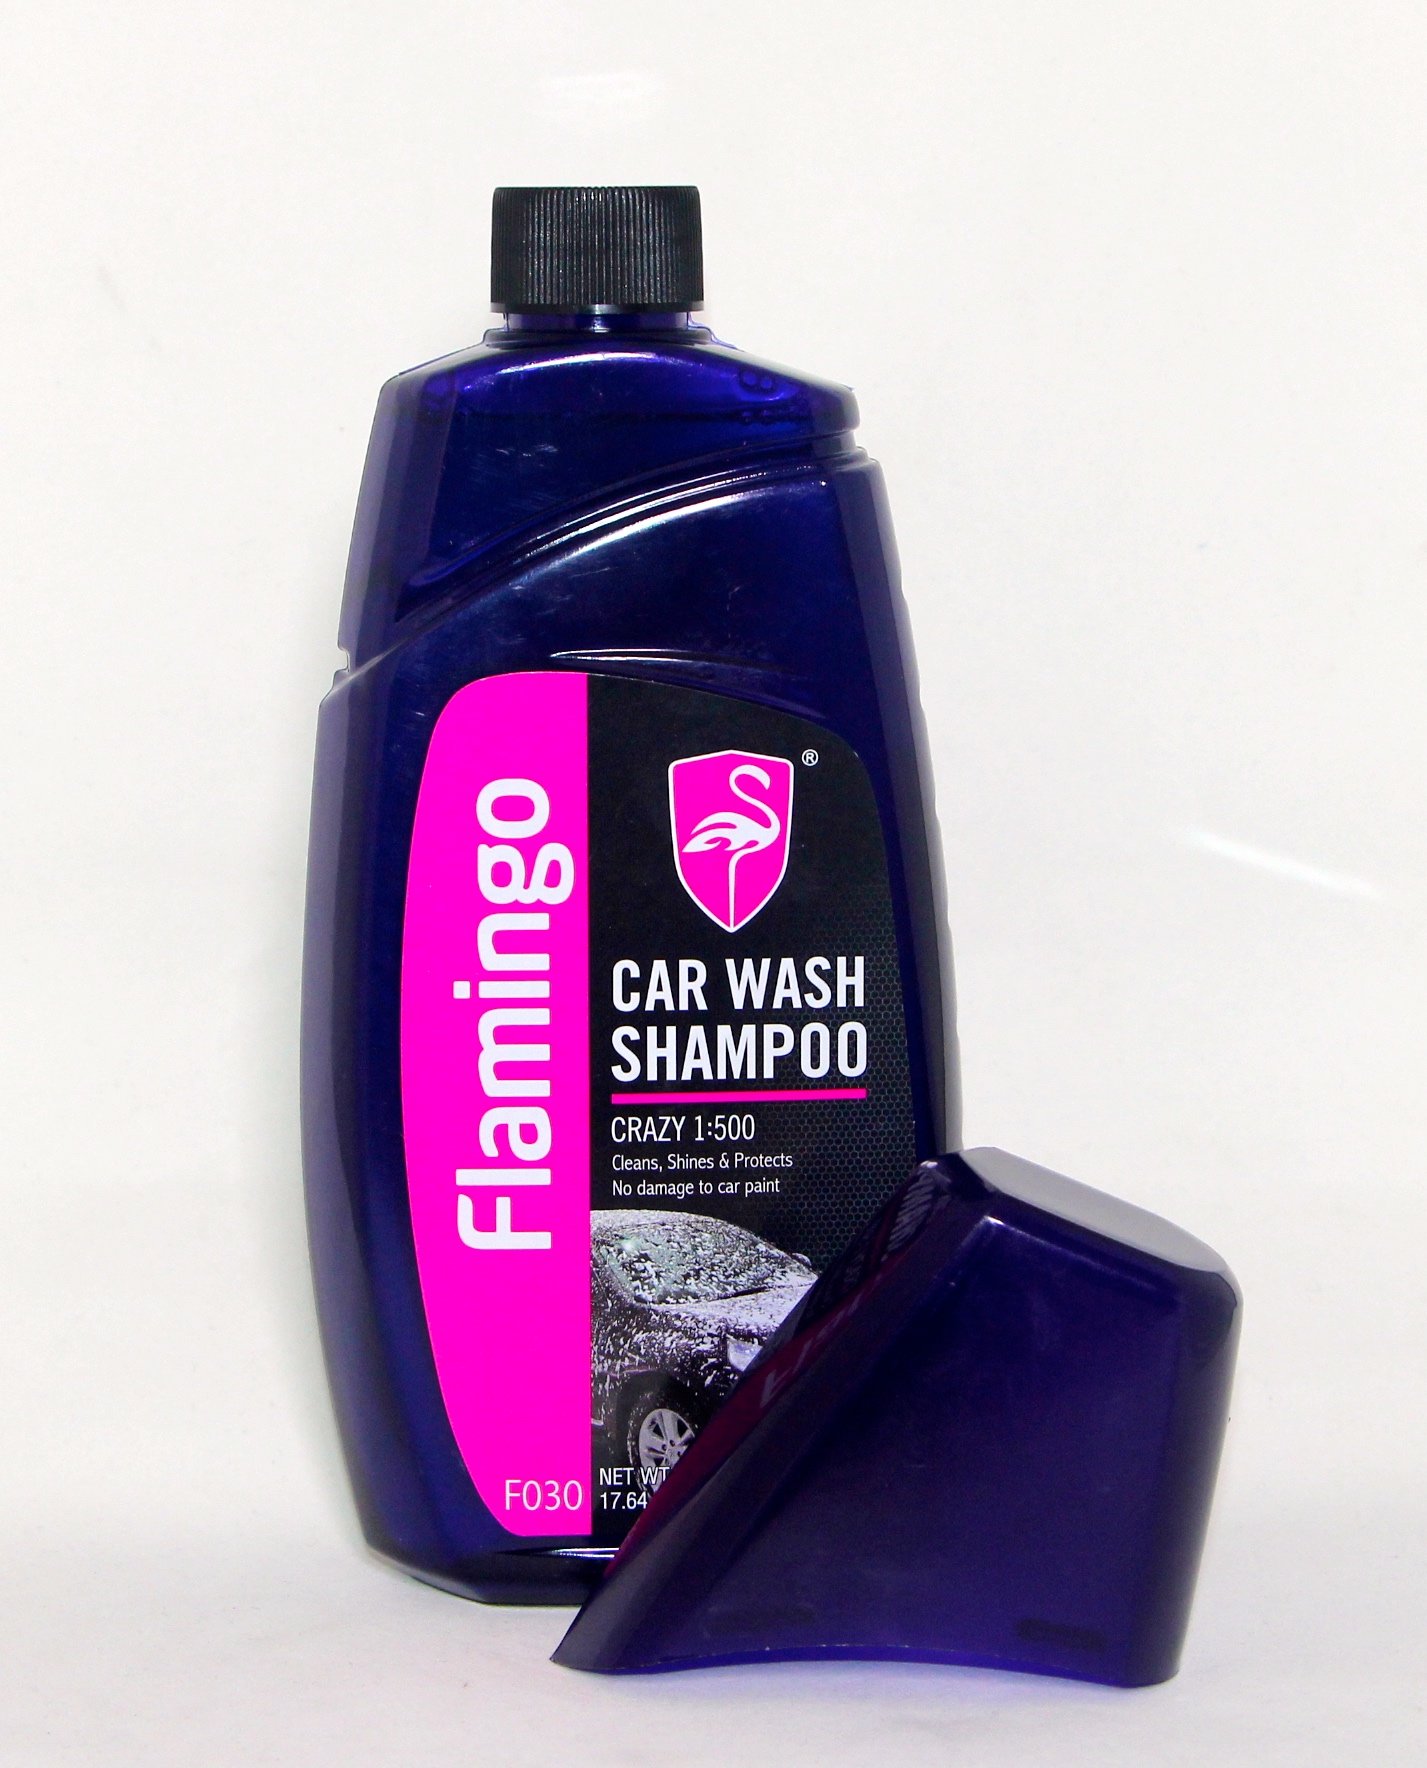 Skywheel Car Accessories BH - Flamingo Car Wash Shampoo #Flamingo  #Available Now